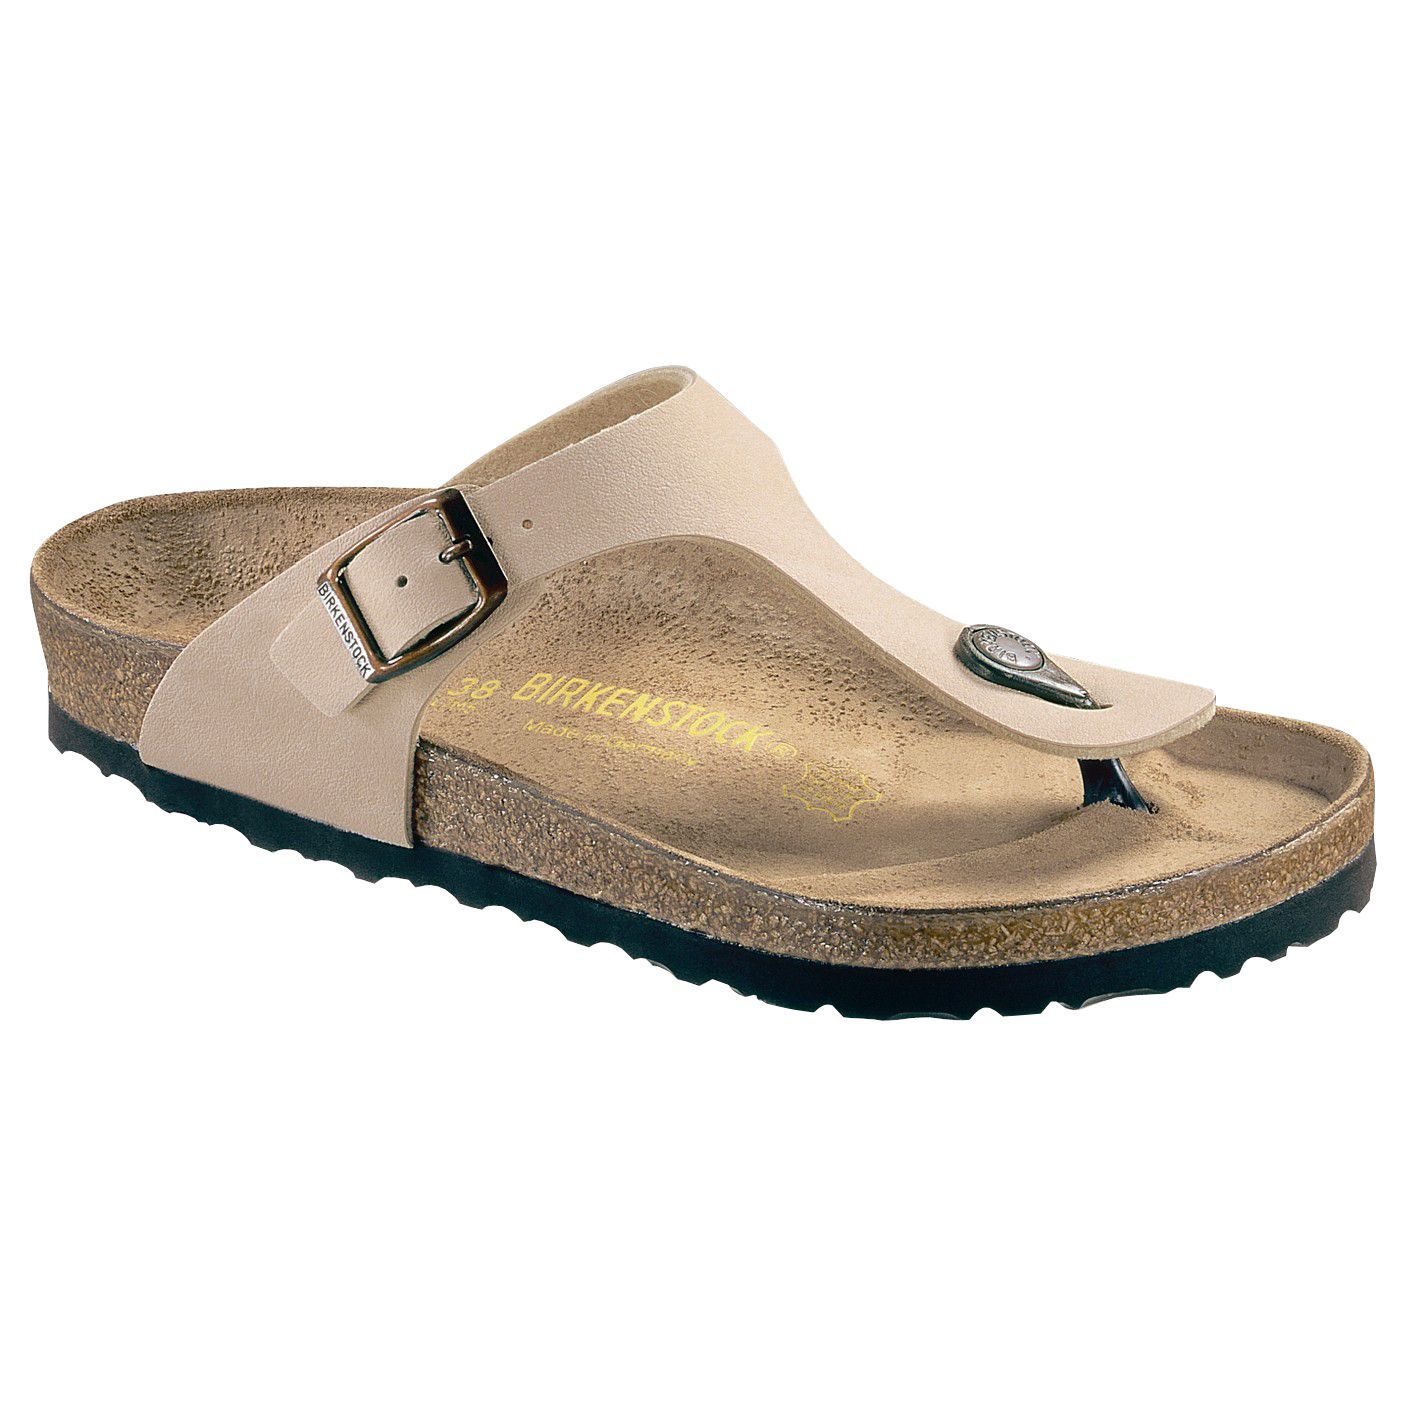 Birkenstock Gizeh Sandals, Ice, Size 5/38